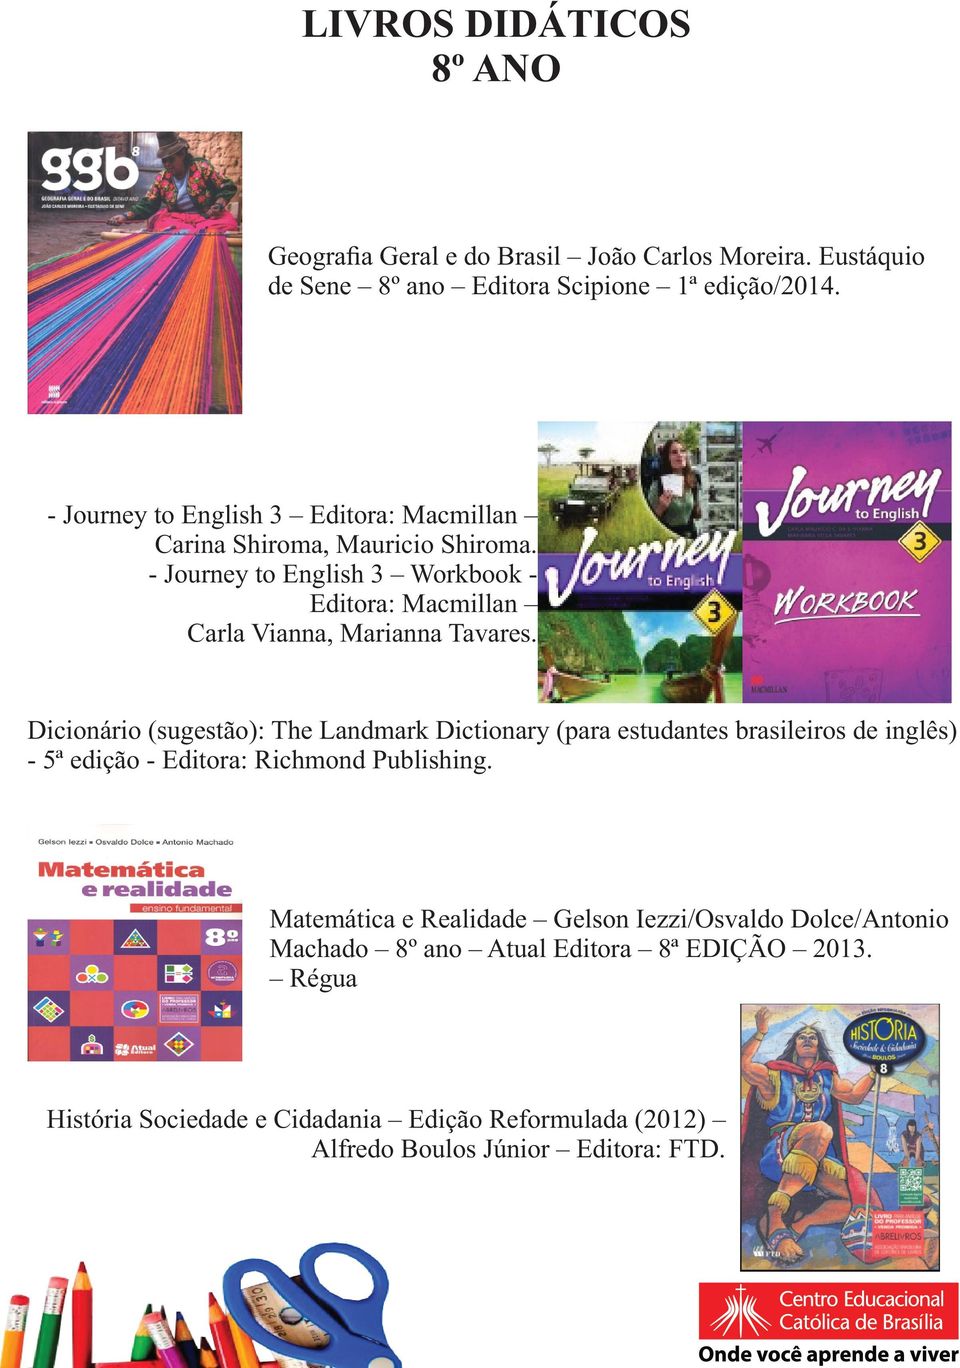 - Journey to English 3 Workbook - Editora: Macmillan Carla Vianna, Marianna Tavares.